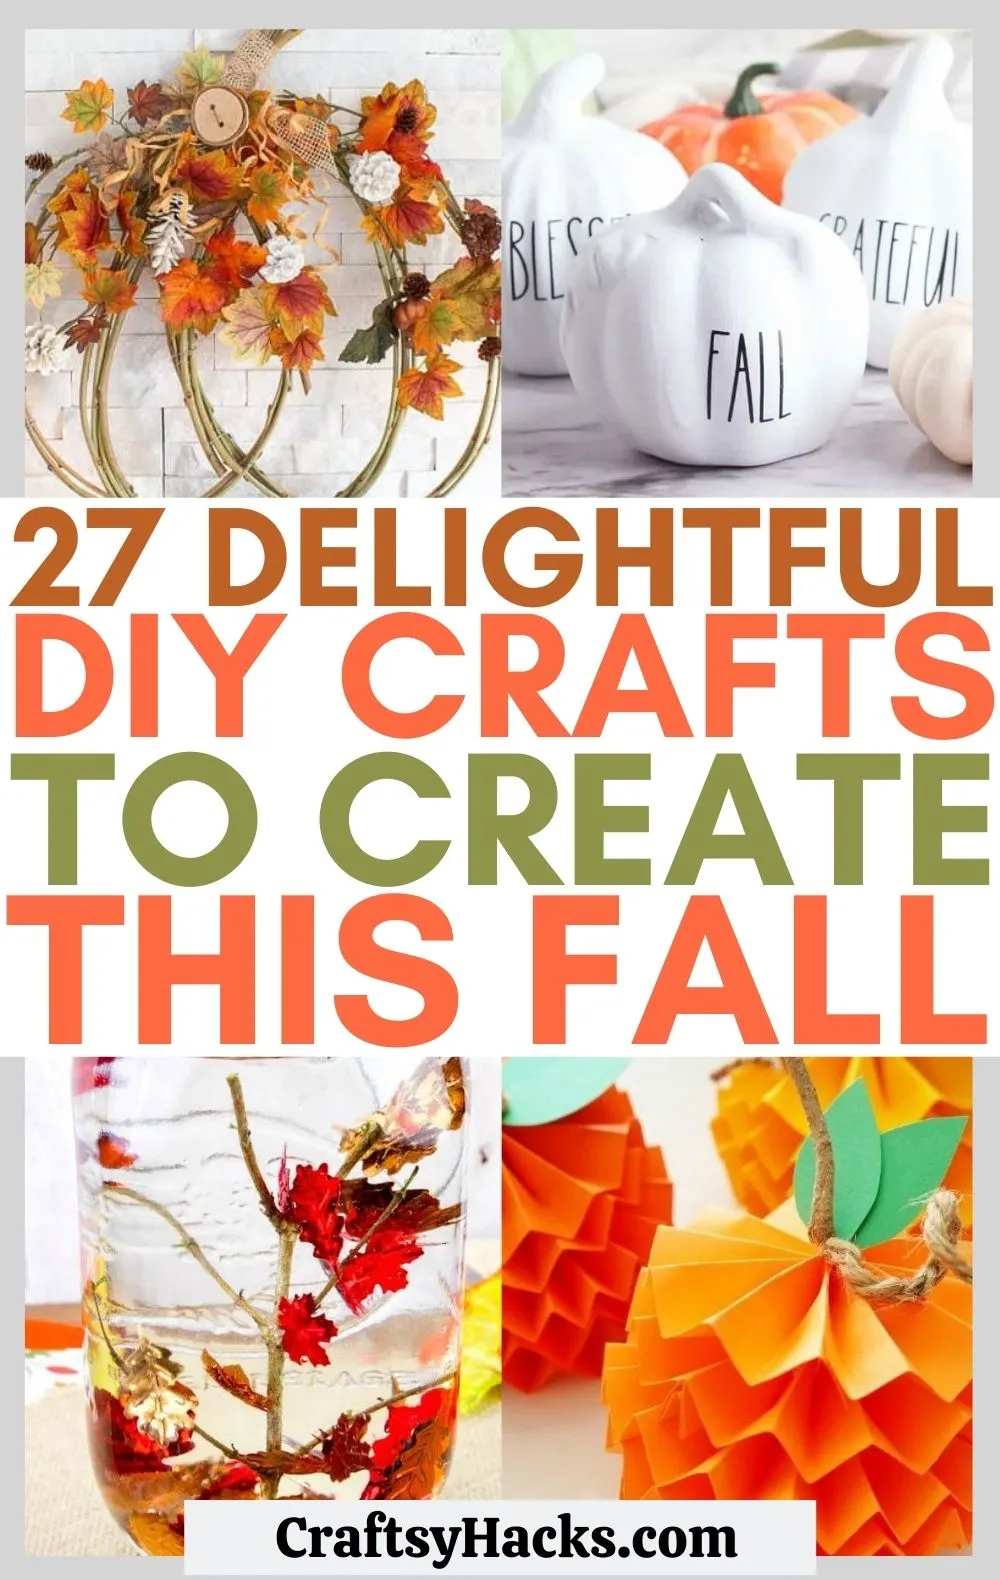 https://craftsyhacks.com/wp-content/uploads/2021/08/27-DIY-fall-crafts-1.jpg.webp